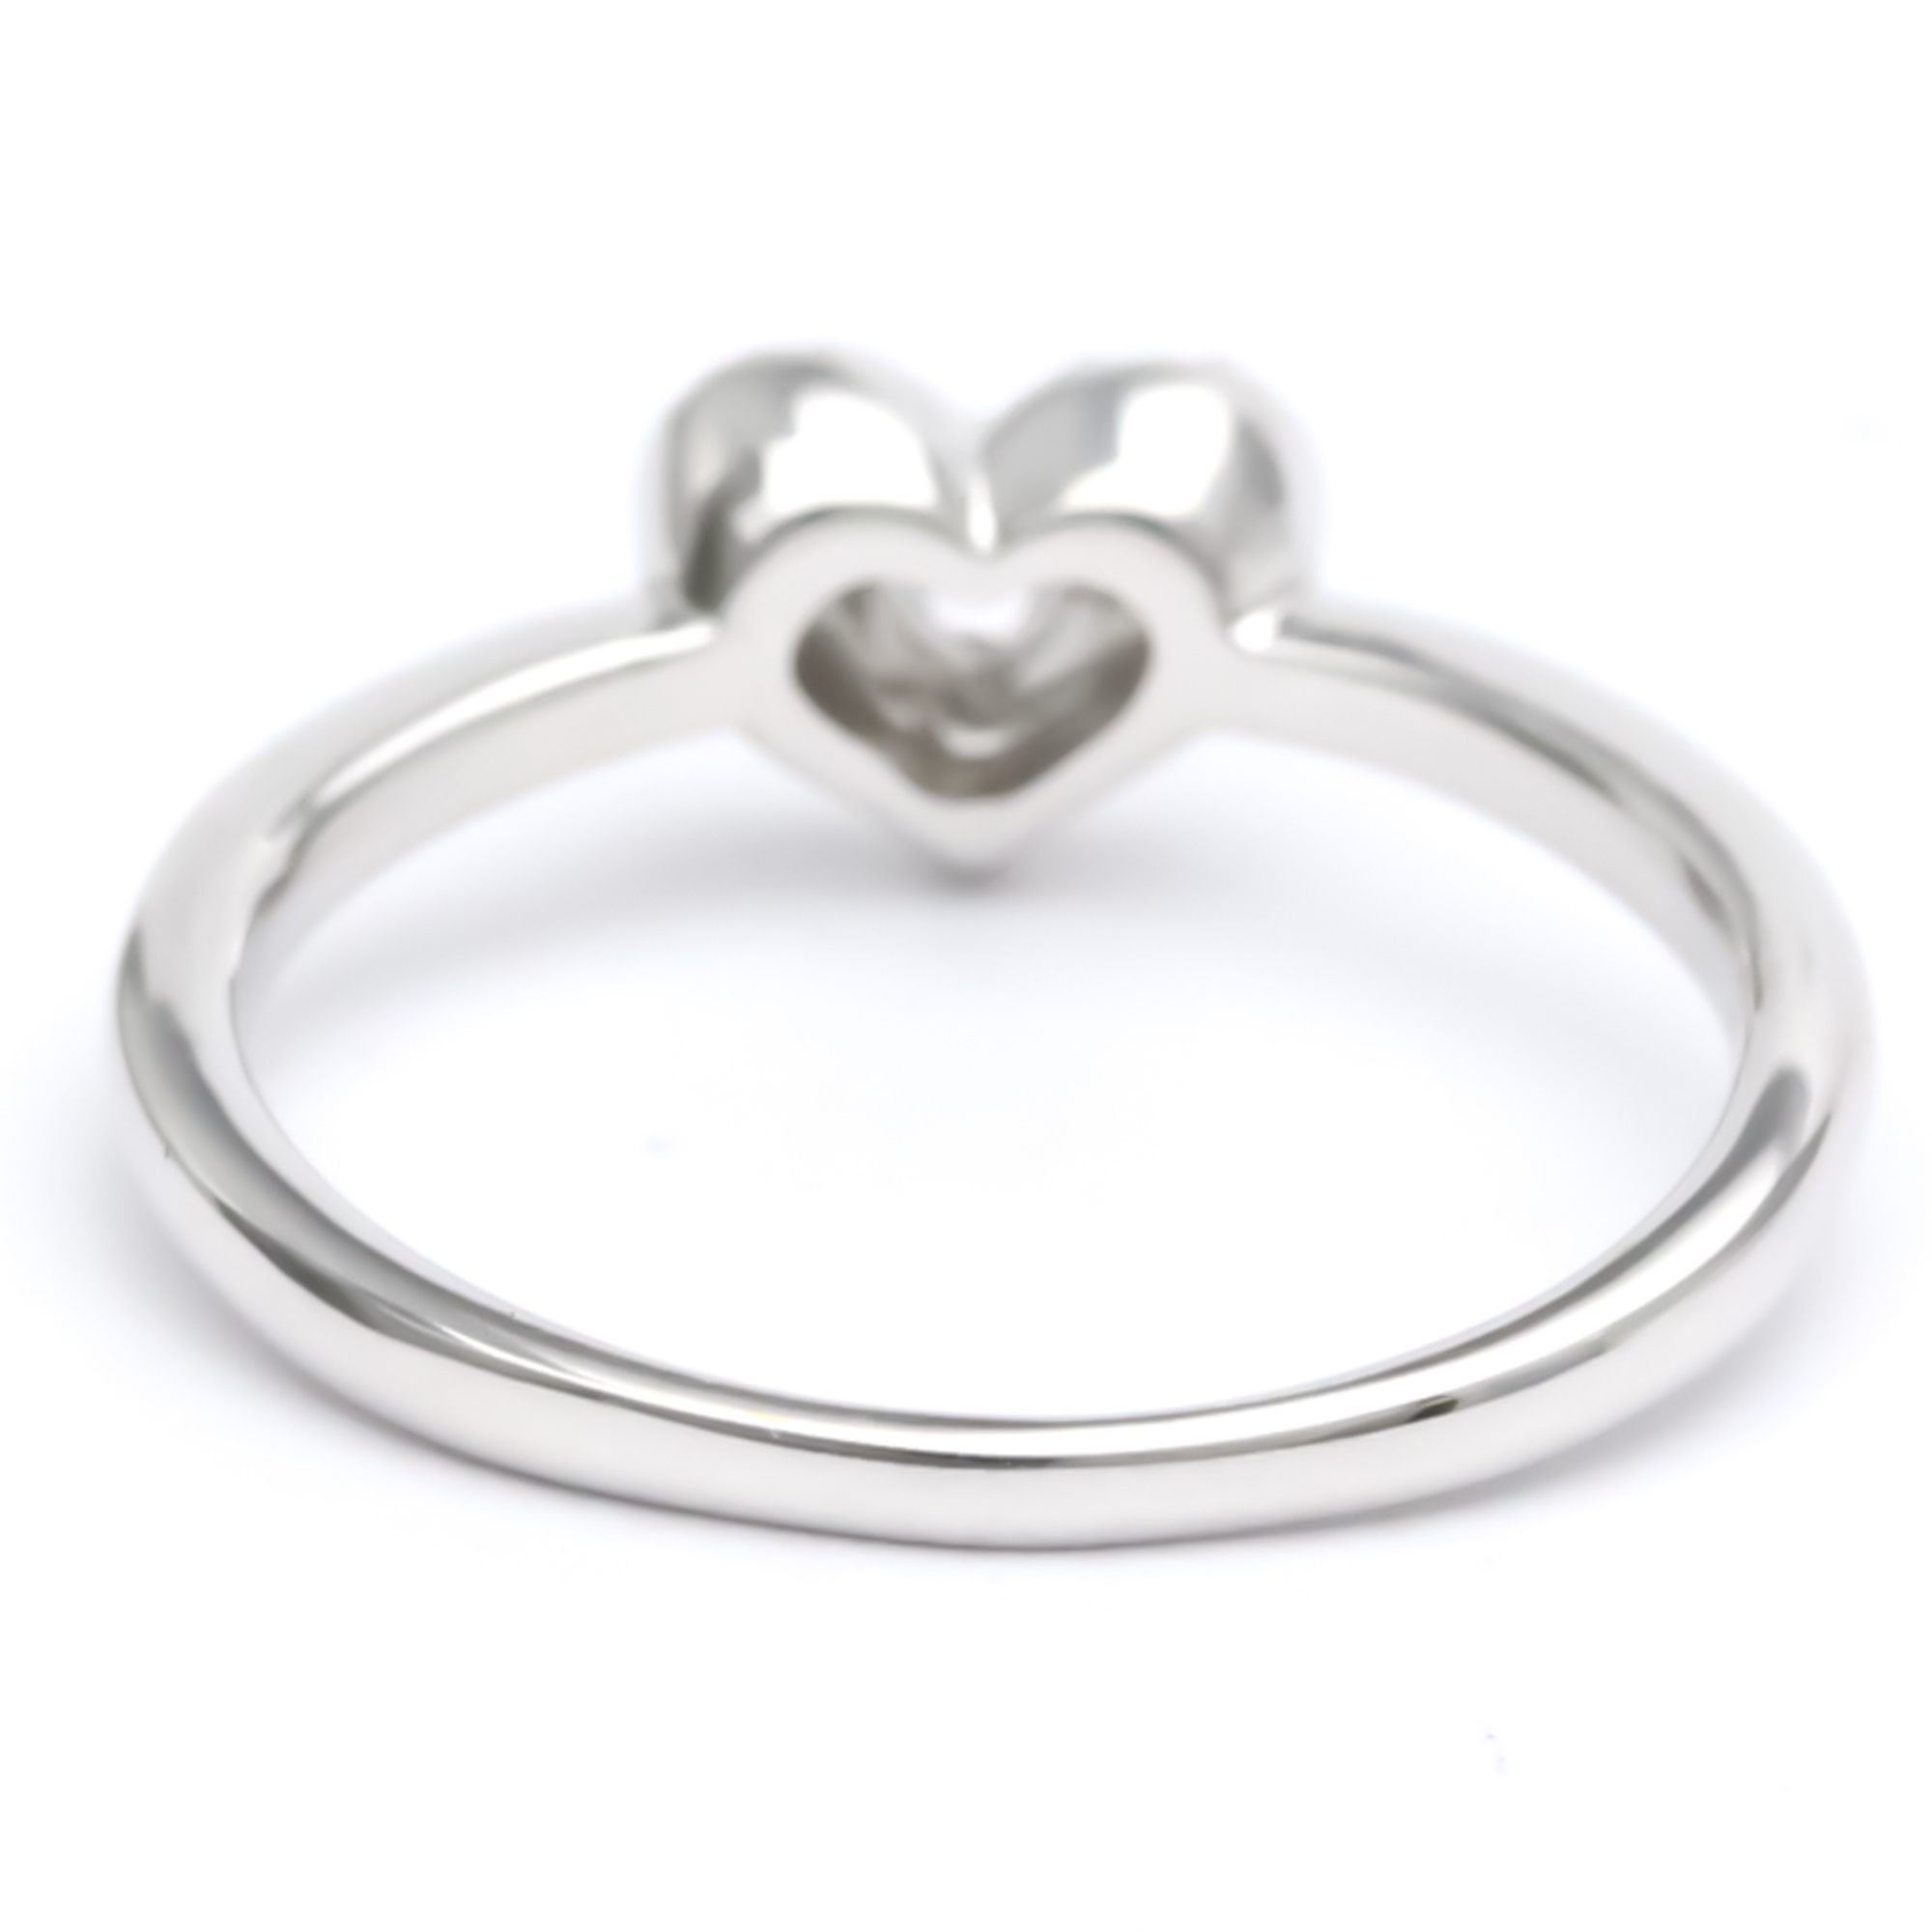 Ponte Vecchio Heart Ring White Gold (18K) Fashion Diamond Band Ring Carat/0.17 Silver